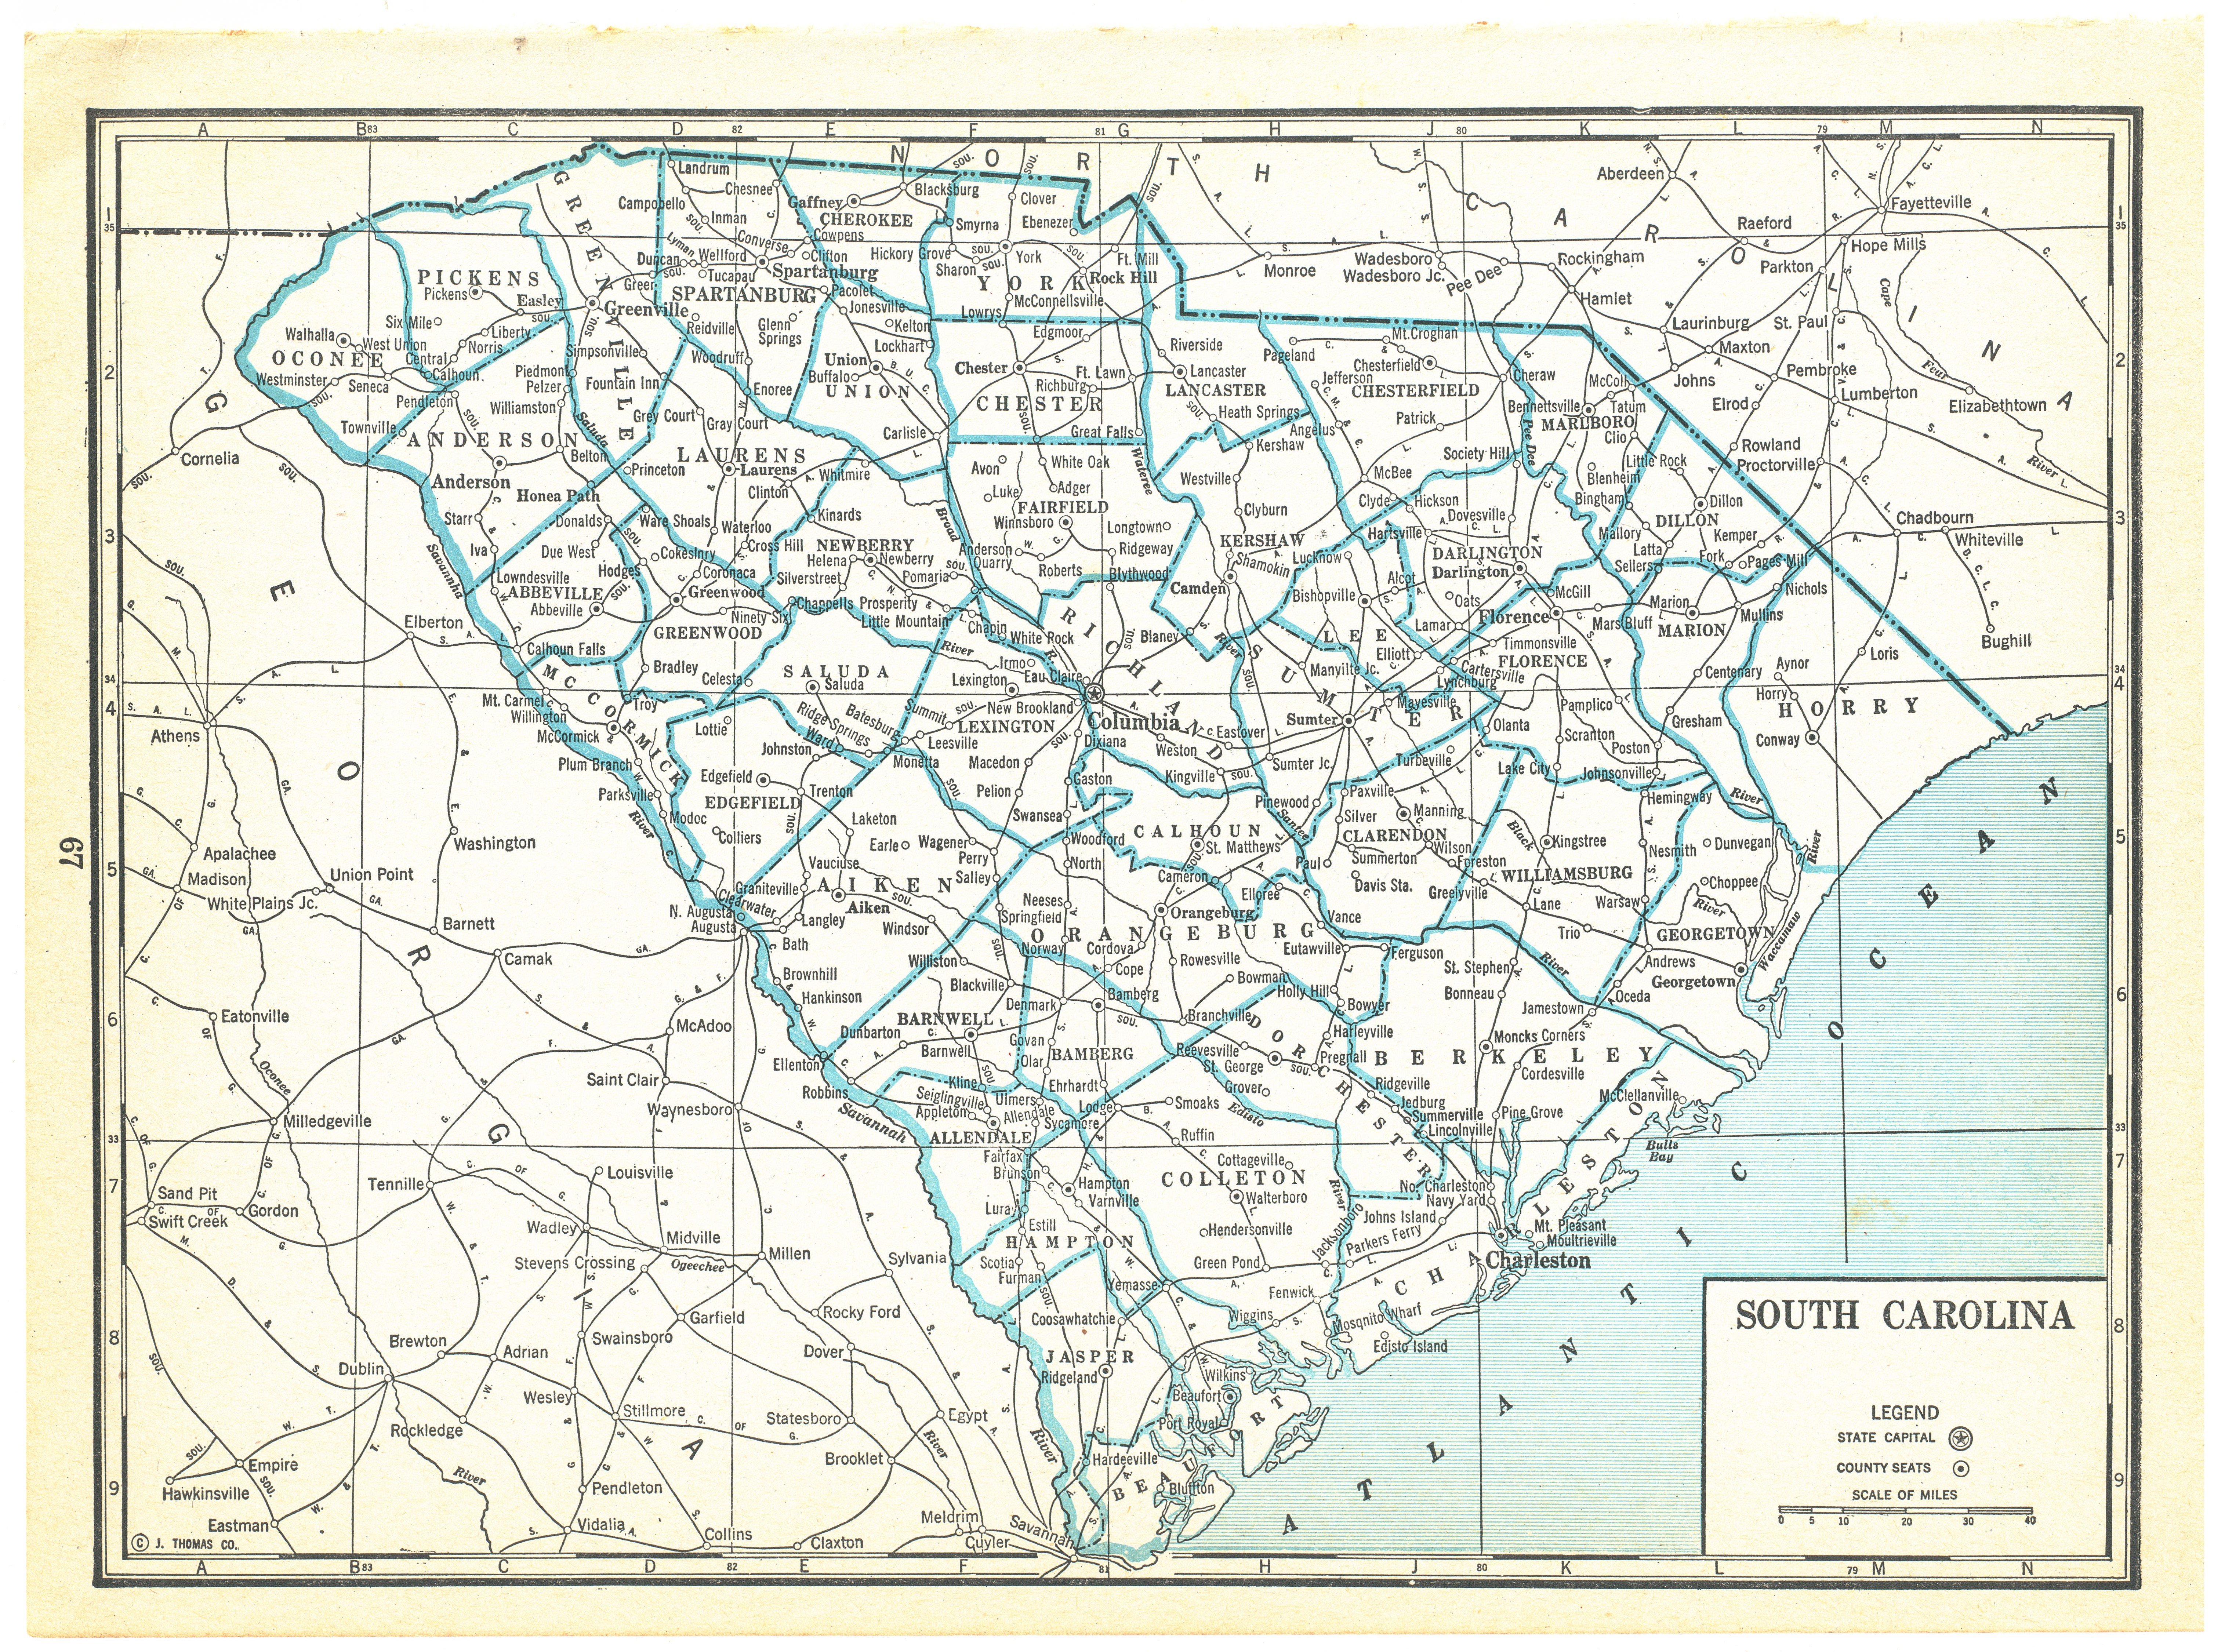 1940 Vintage Atlas Map Page - South Dakota on one side and South Carolina on ...